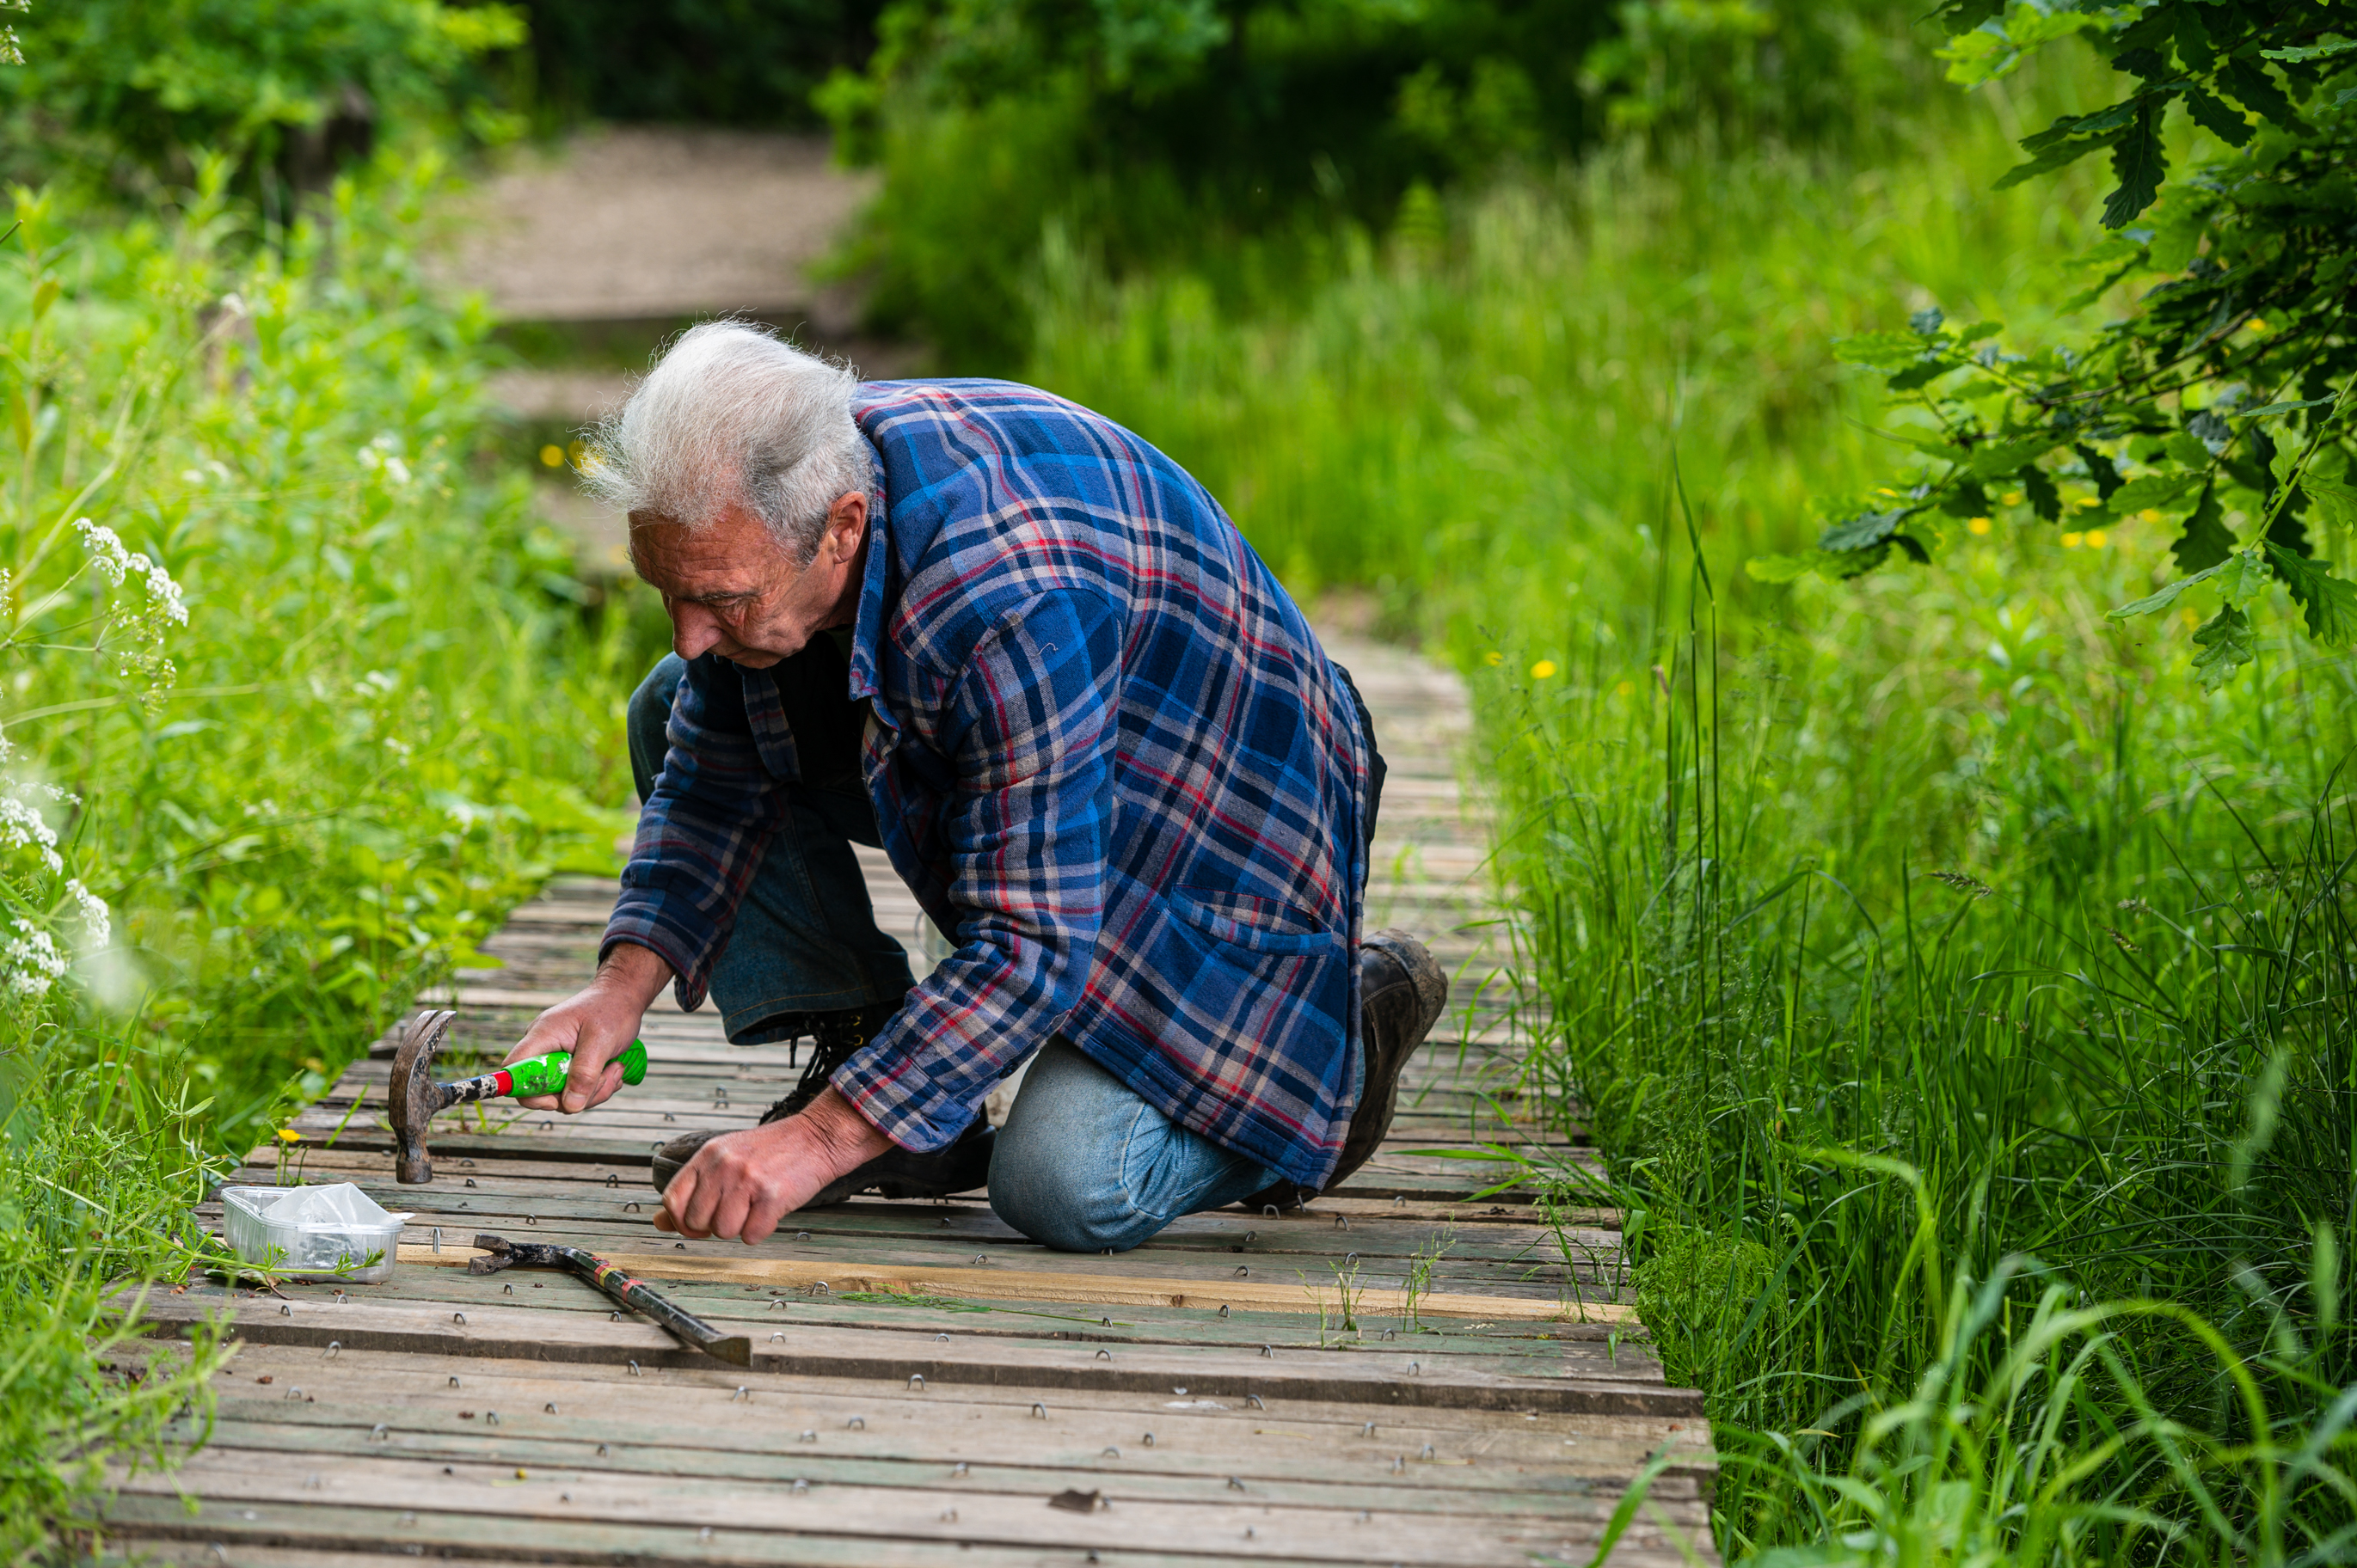 Older man hammering nails into a wooden garden path